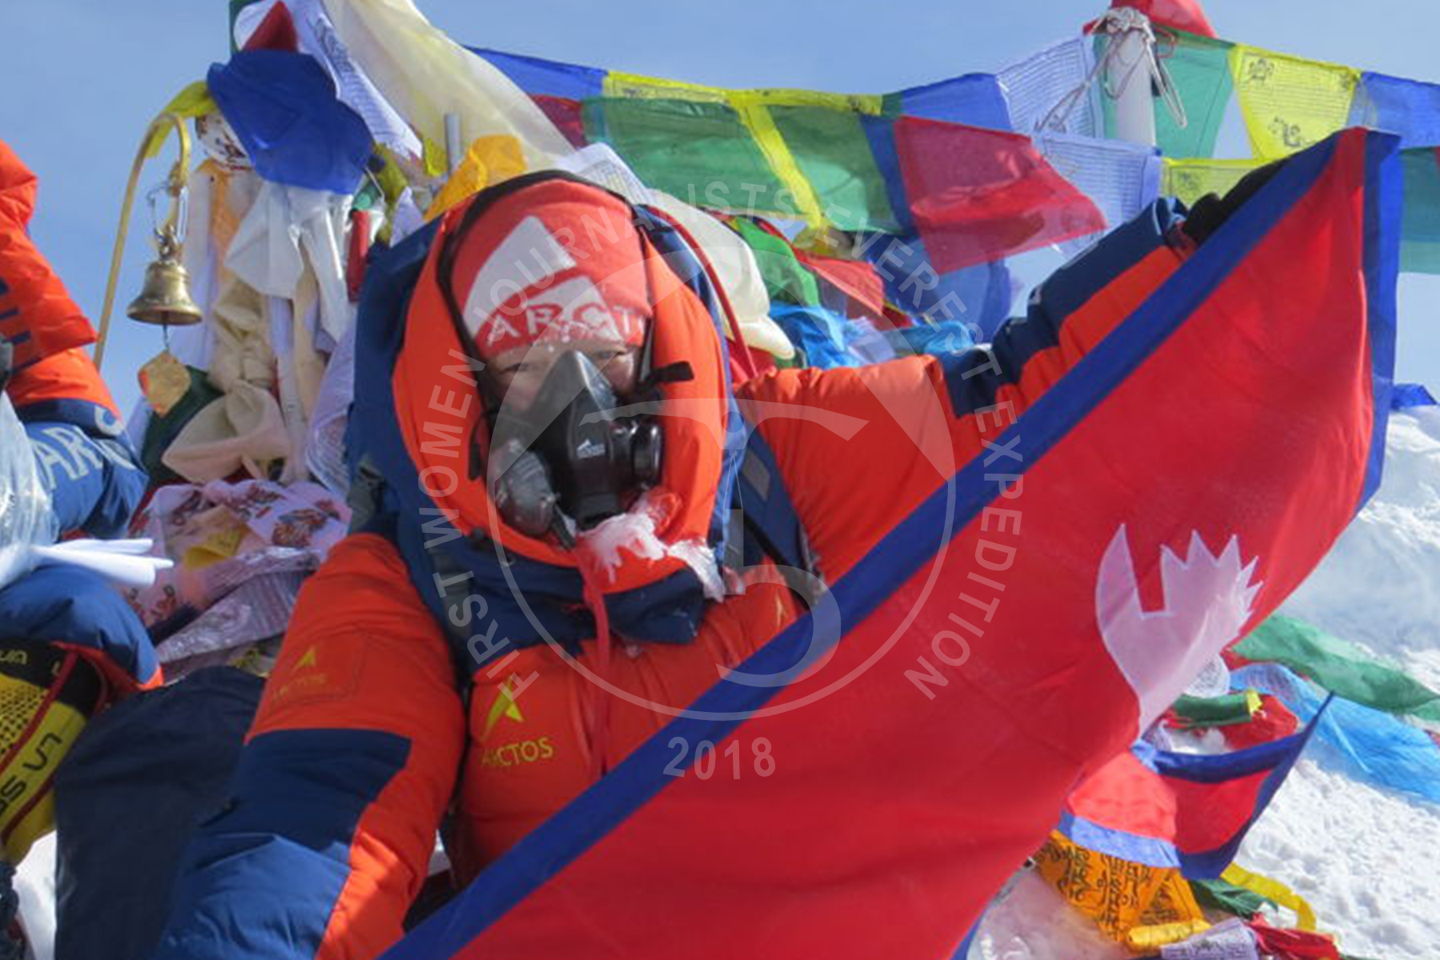 Mt. Everest (8848) Expedition via Nepal